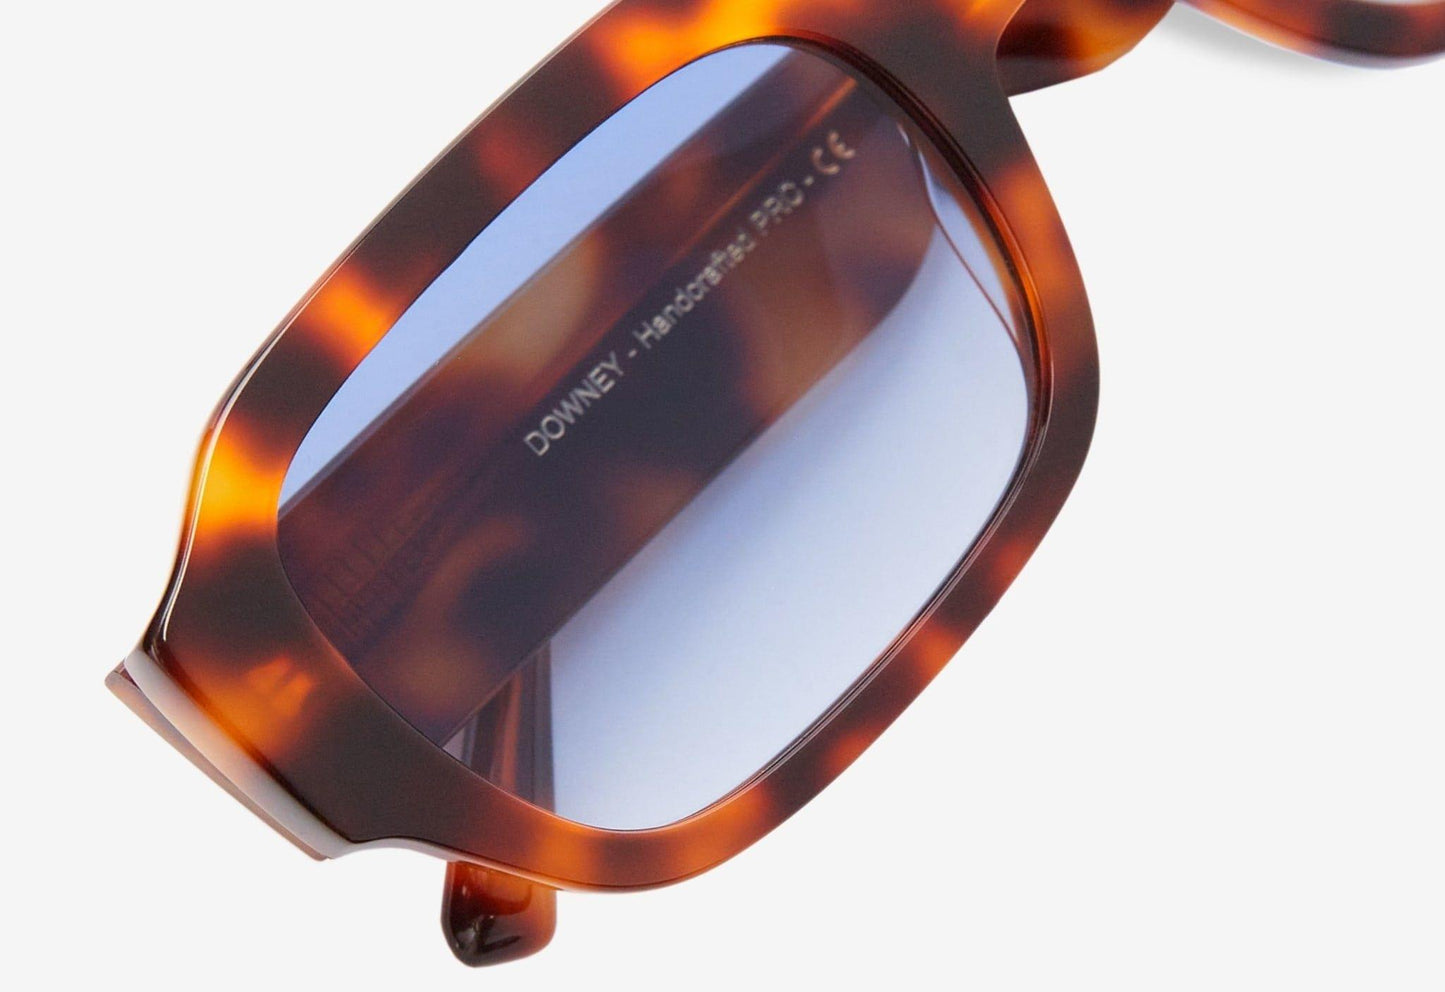 Downey, Geometric sunglasses for men and women blue lens UV400 protection